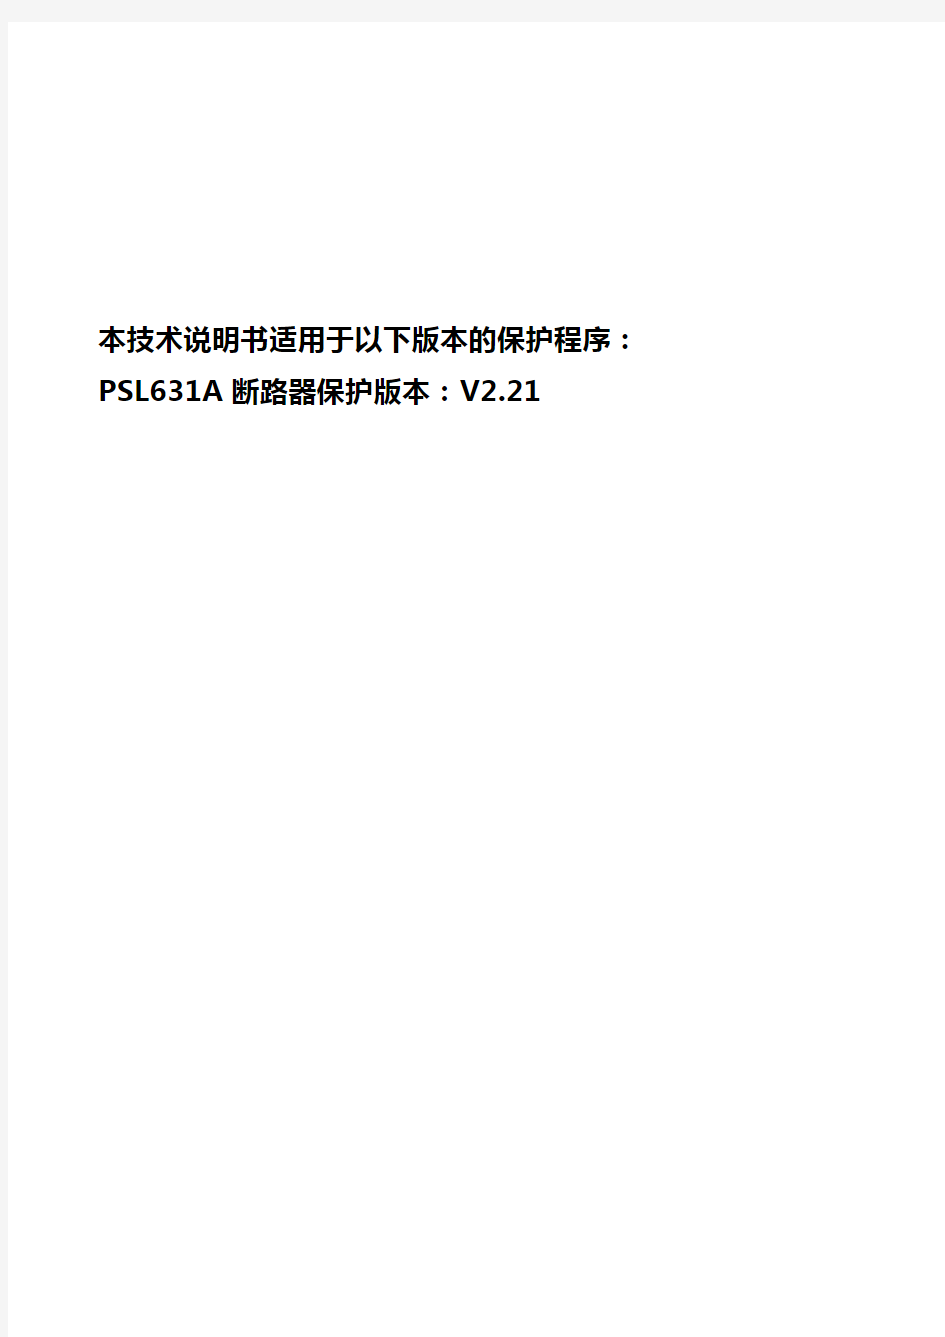 PSL631A技术说明书V2.0